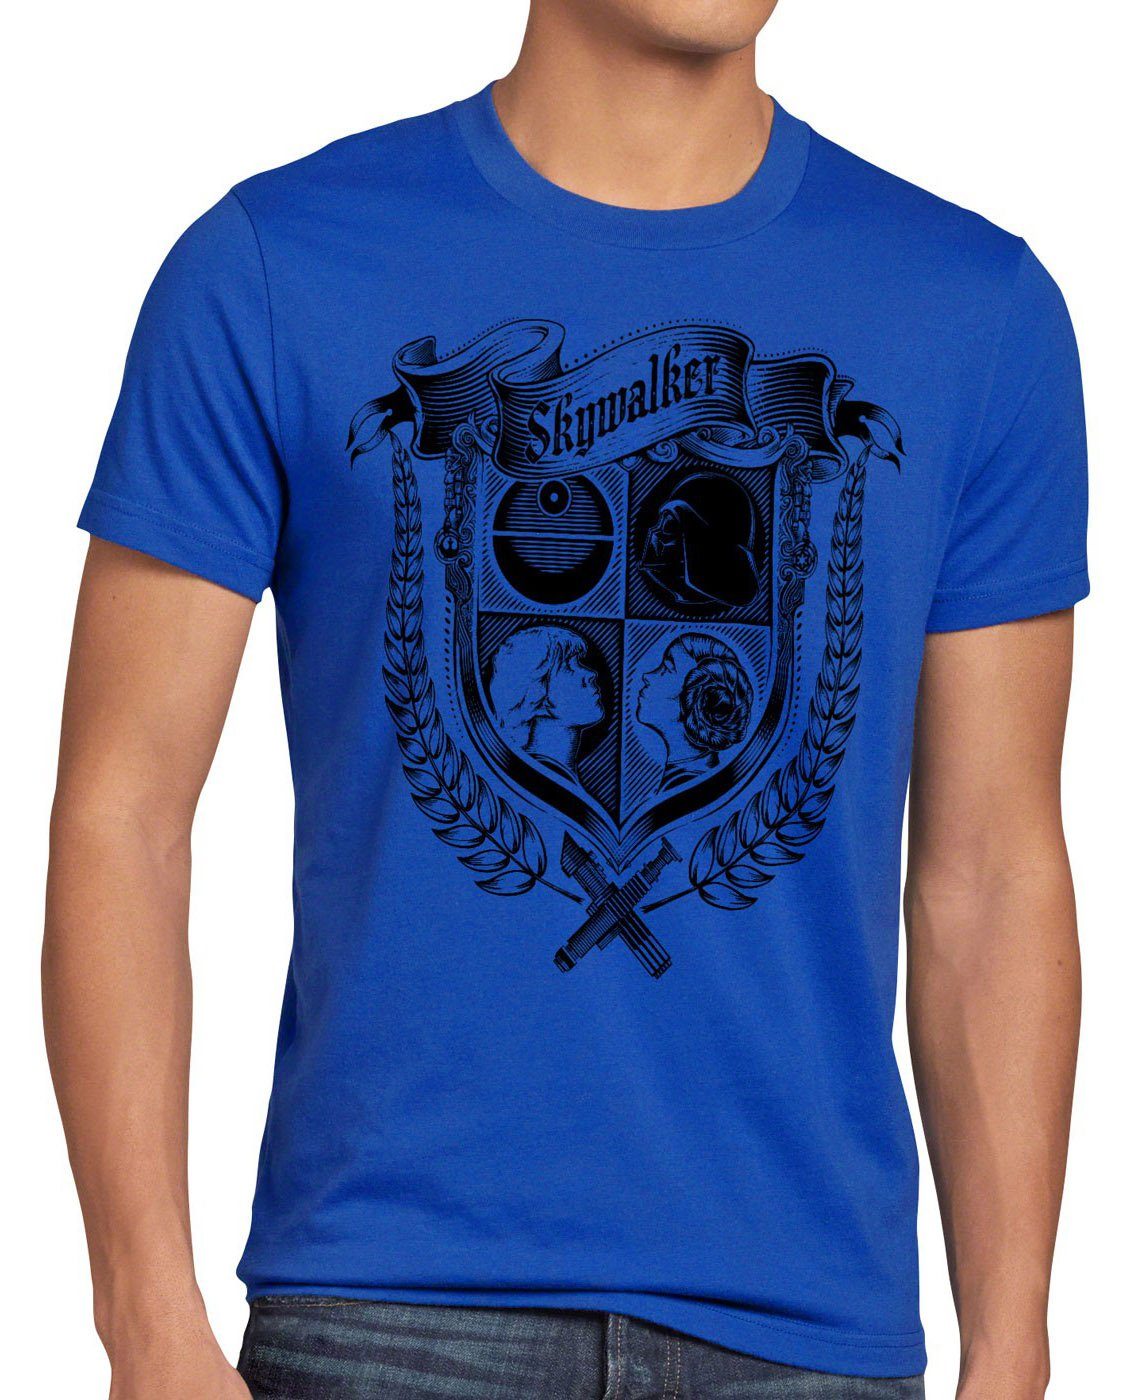 style3 Print-Shirt Herren T-Shirt Skywalker Wappen star krieg rebelliob yoda wars der sterne luke blau